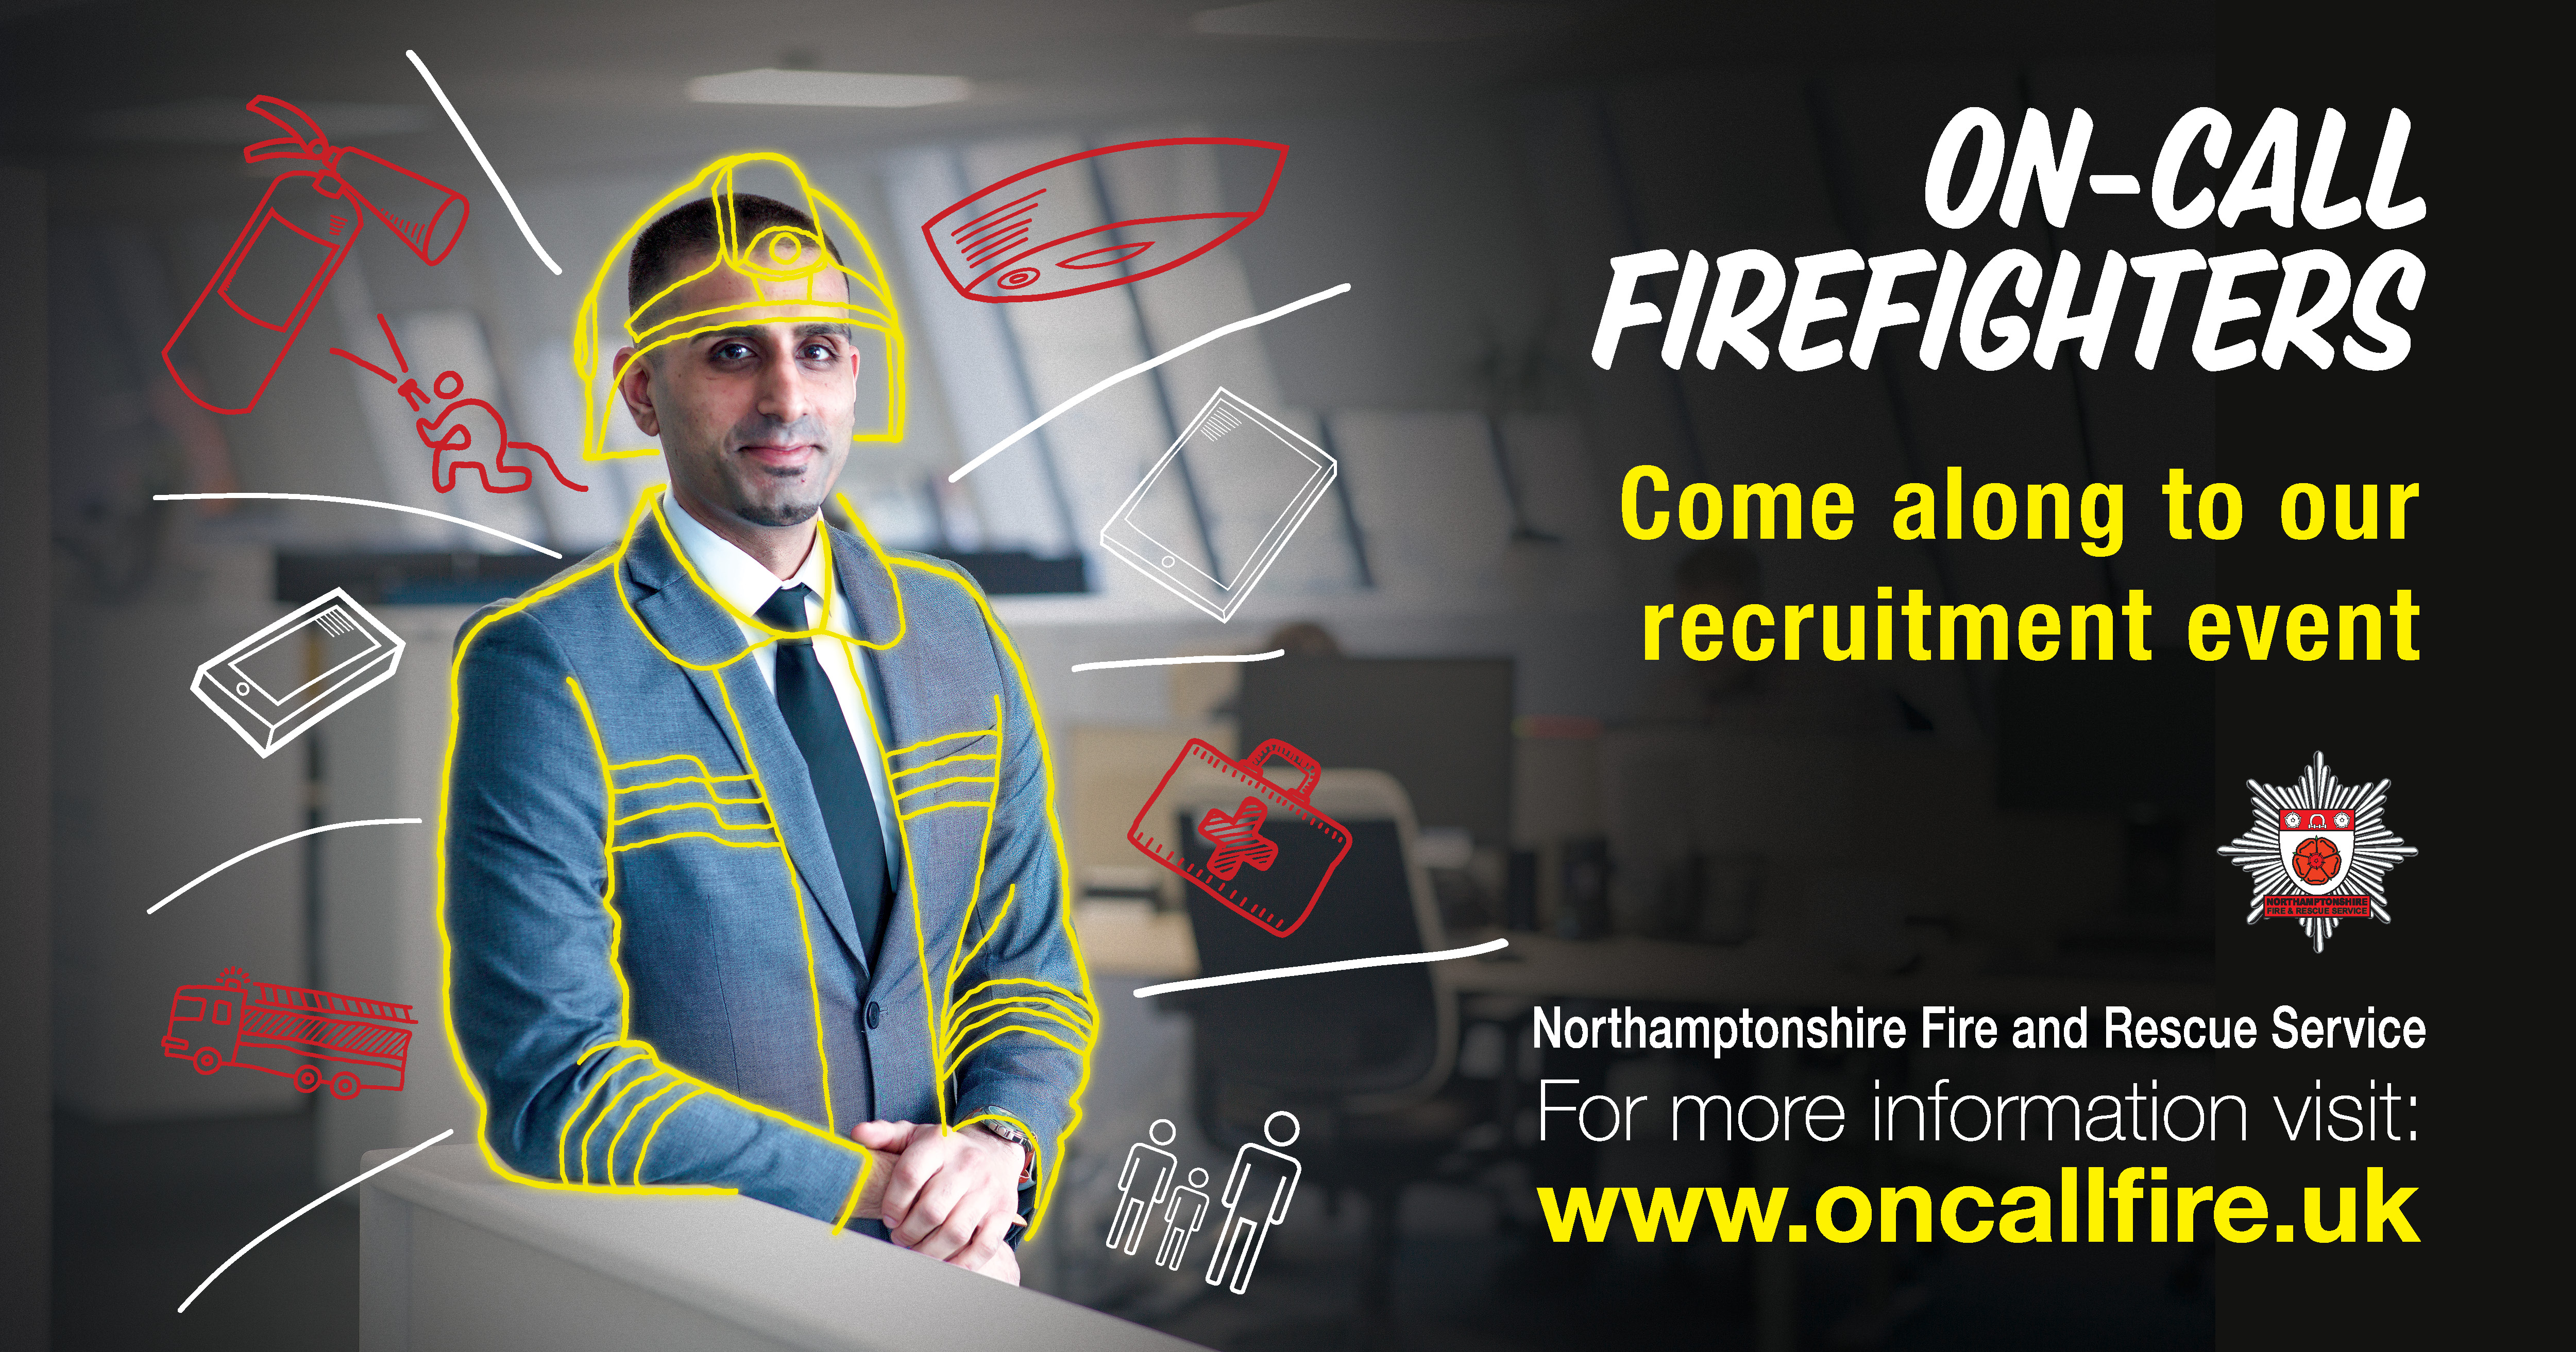 On-Call firefighter recruitment poster